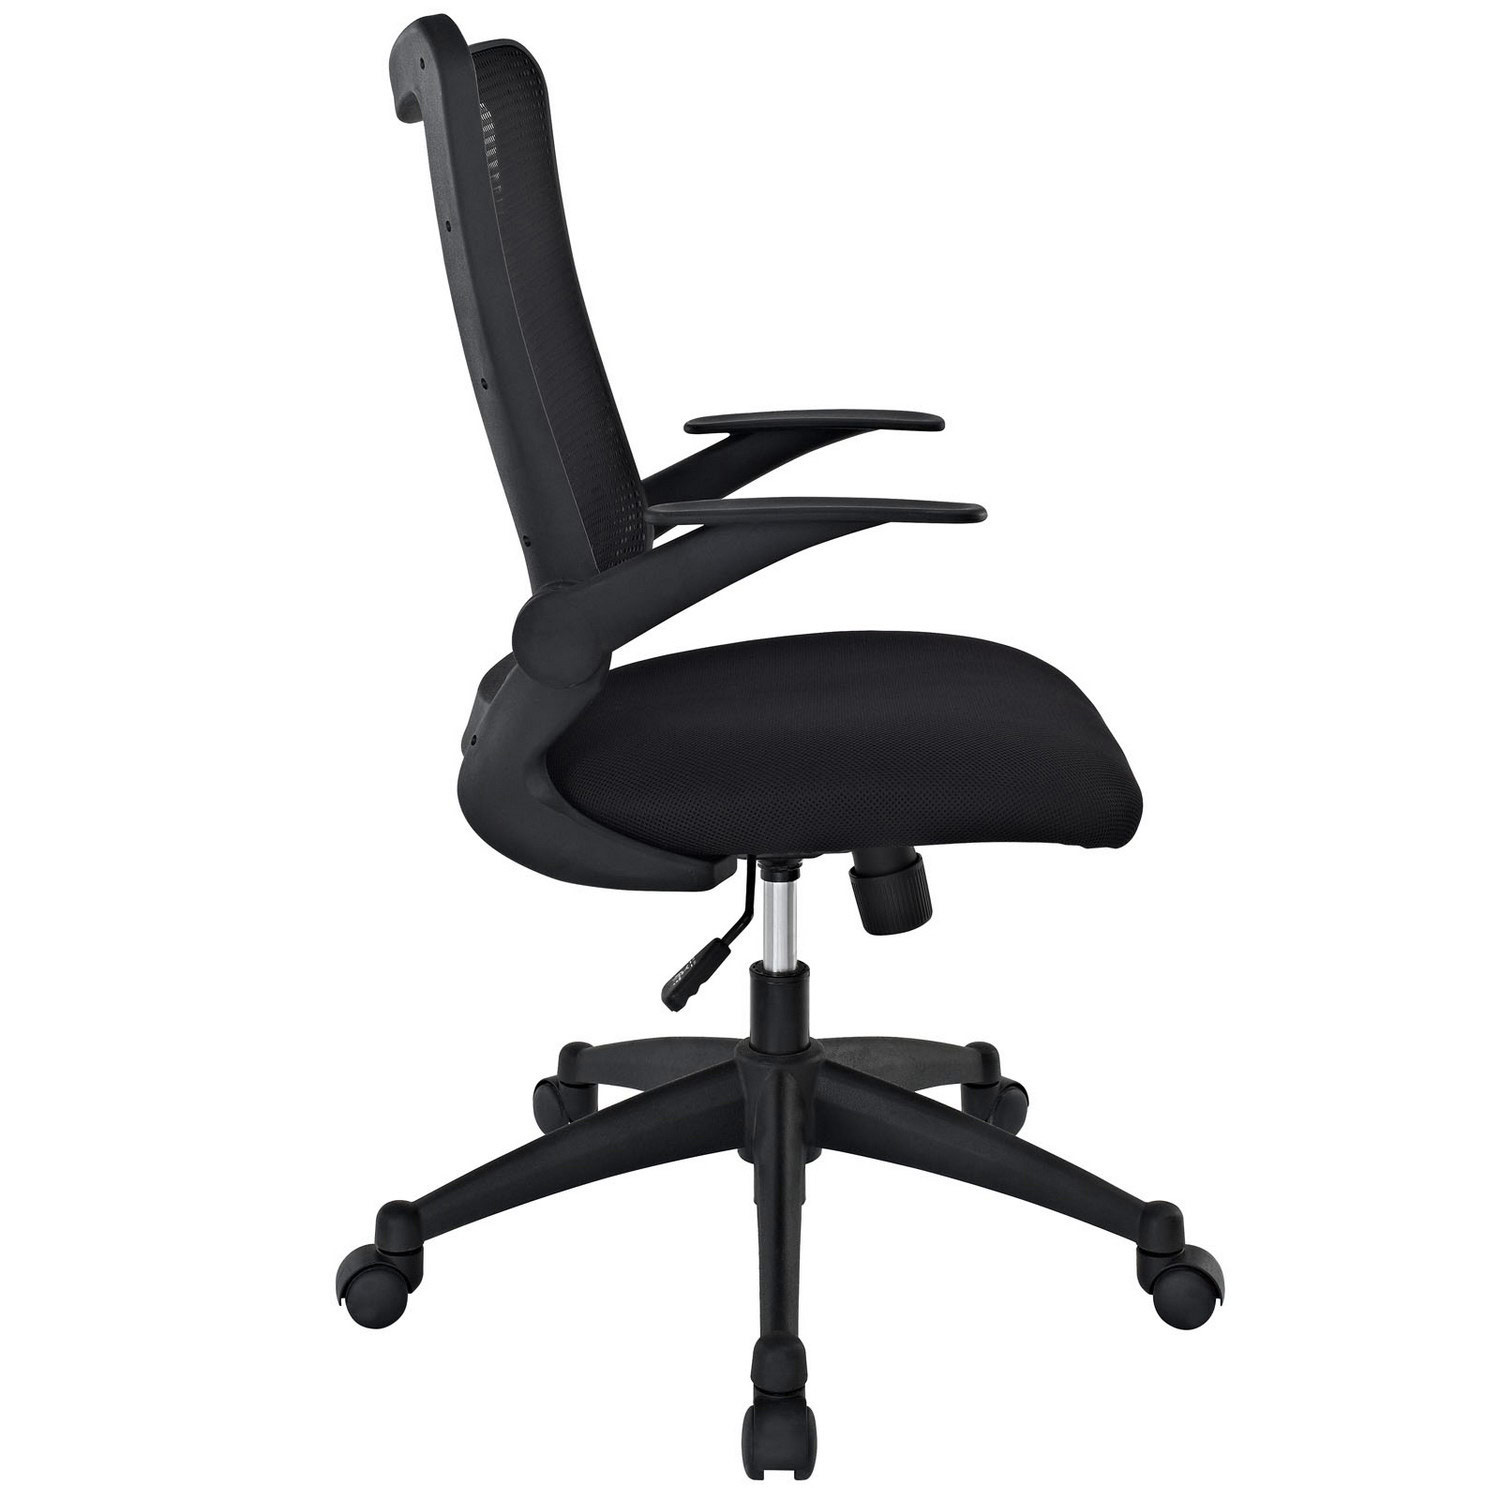 Modway Explorer Mid Back Office Chair - Black